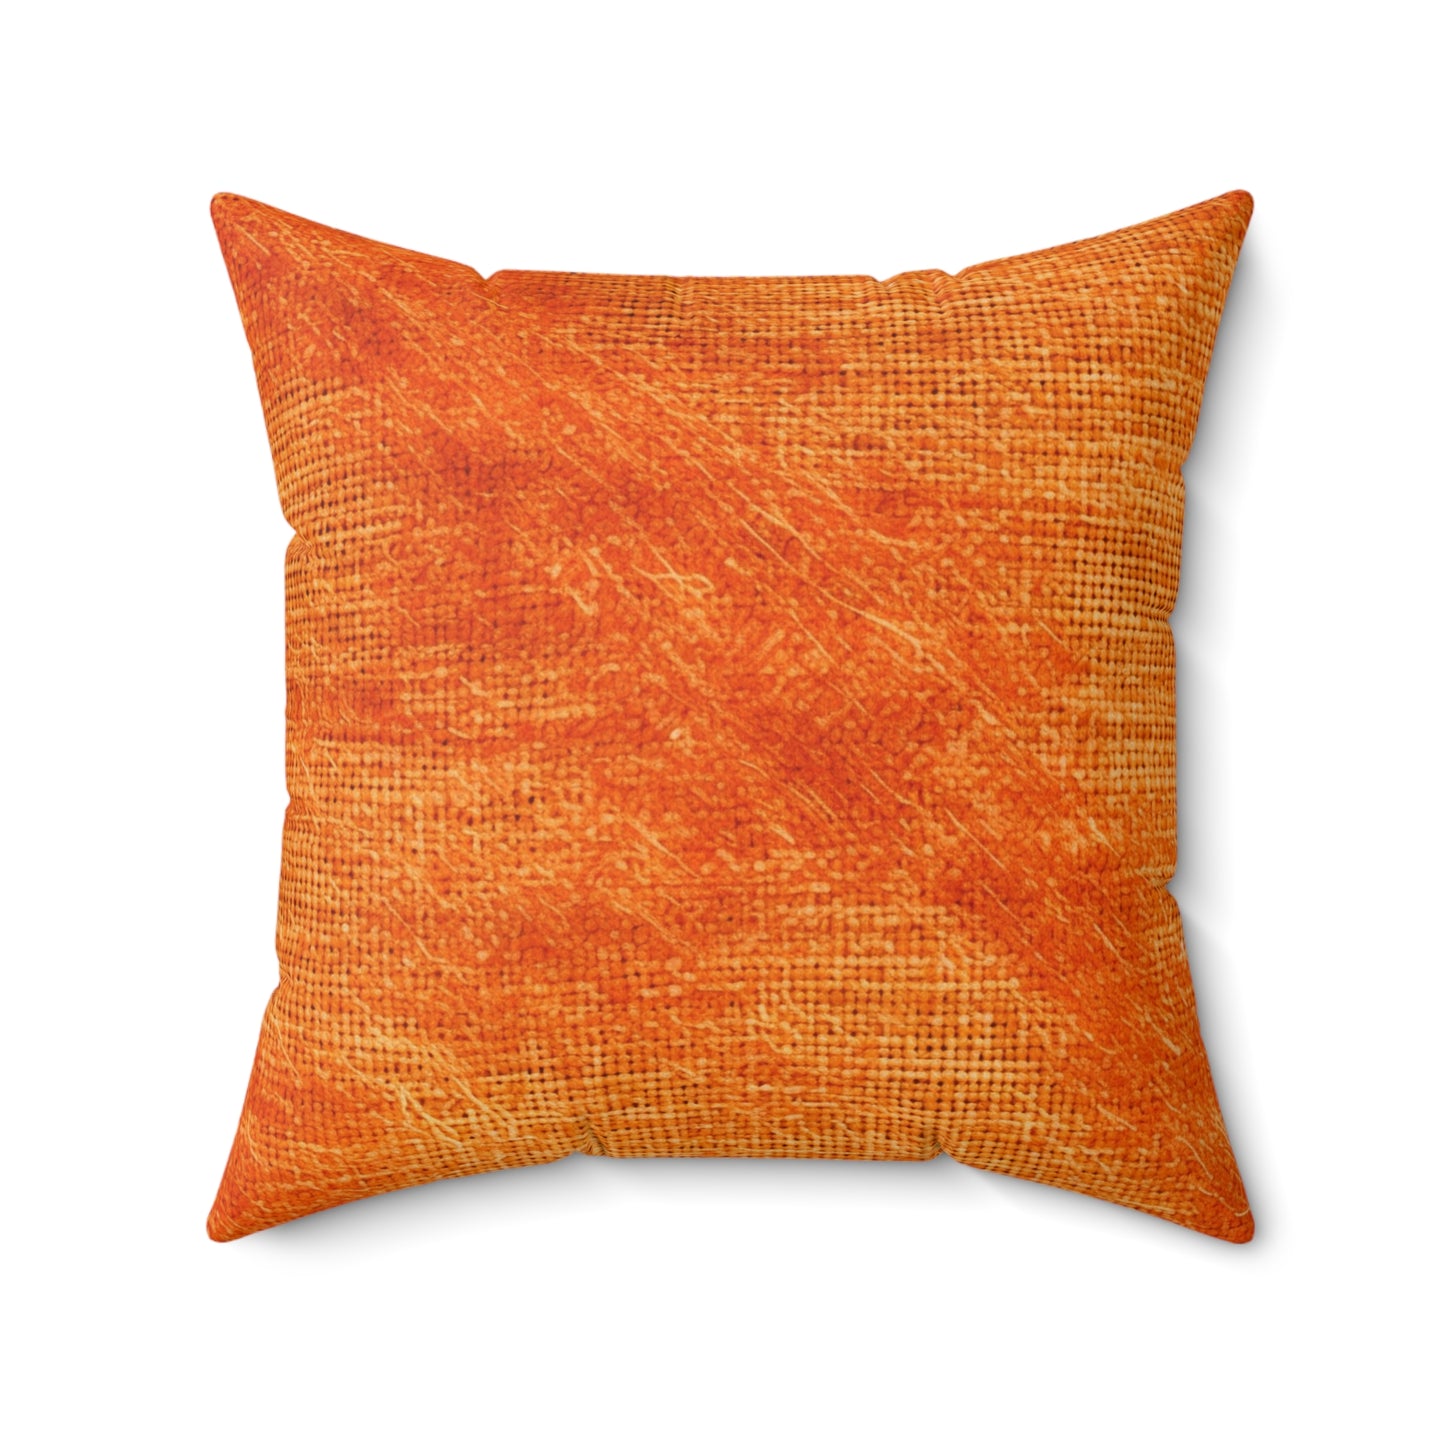 Burnt Orange/Rust: Denim-Inspired Autumn Fall Color Fabric - Spun Polyester Square Pillow